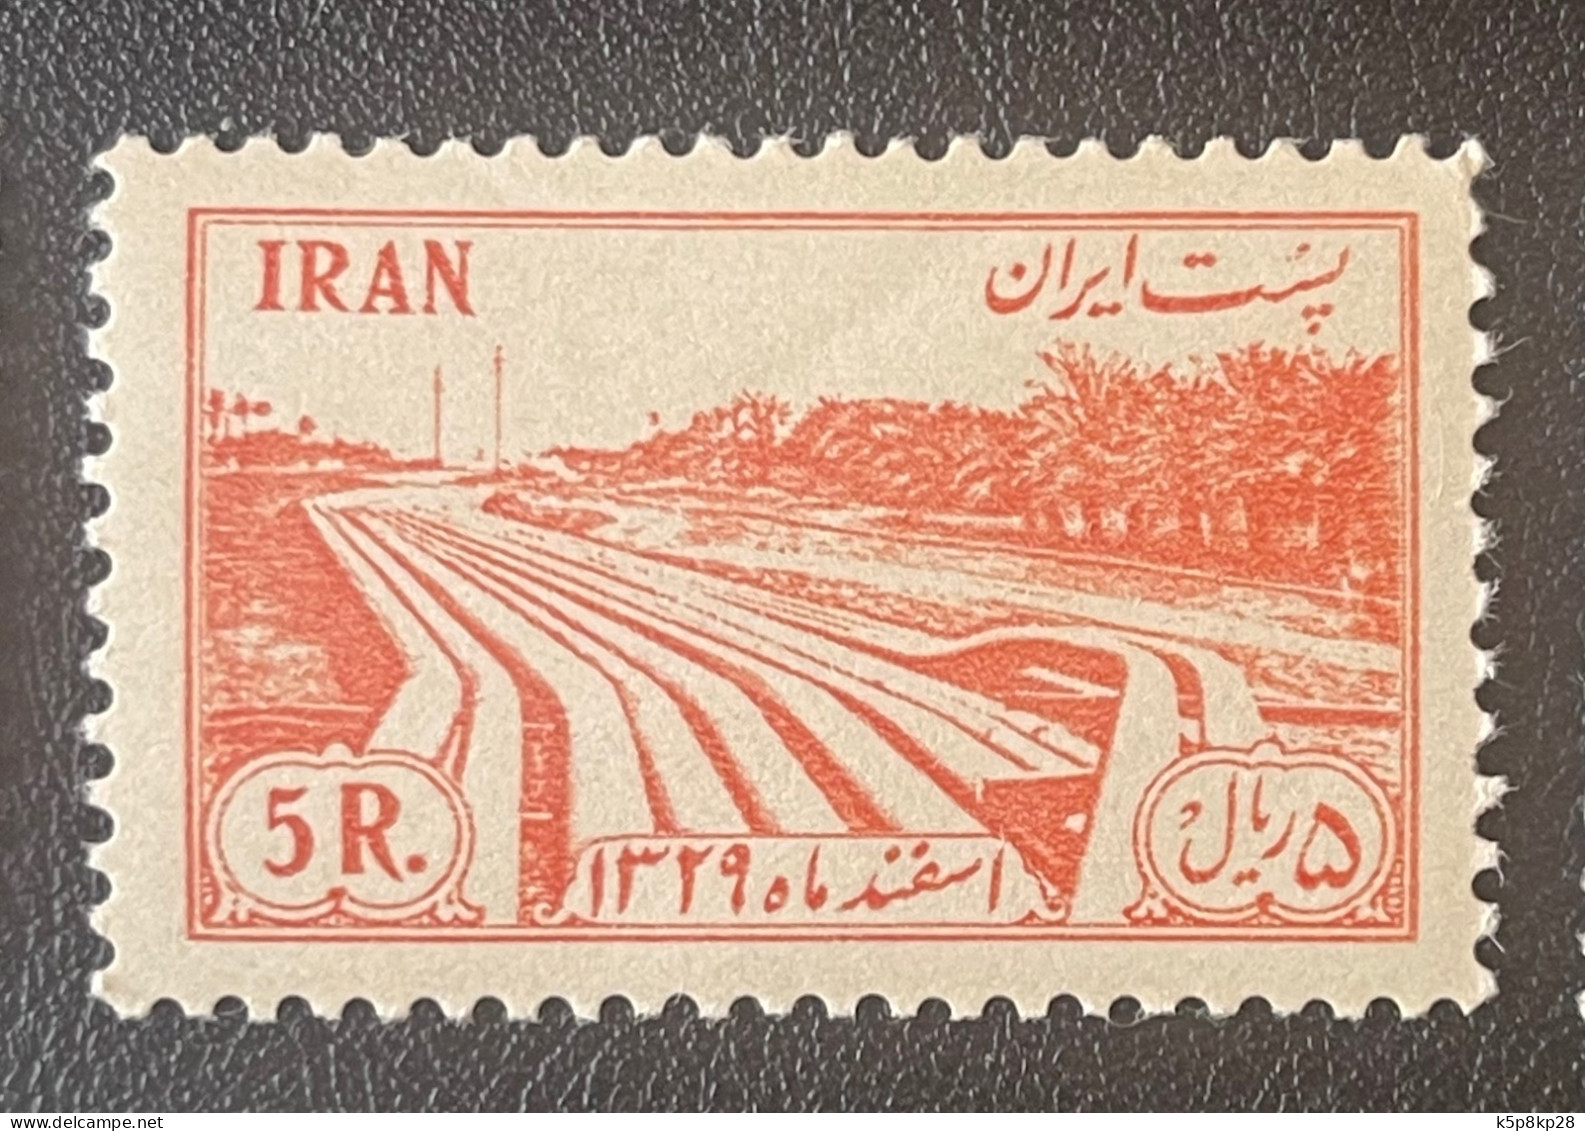 1953 Nationalization Of Oil Industry, Full Set, MNH, VF - Iran